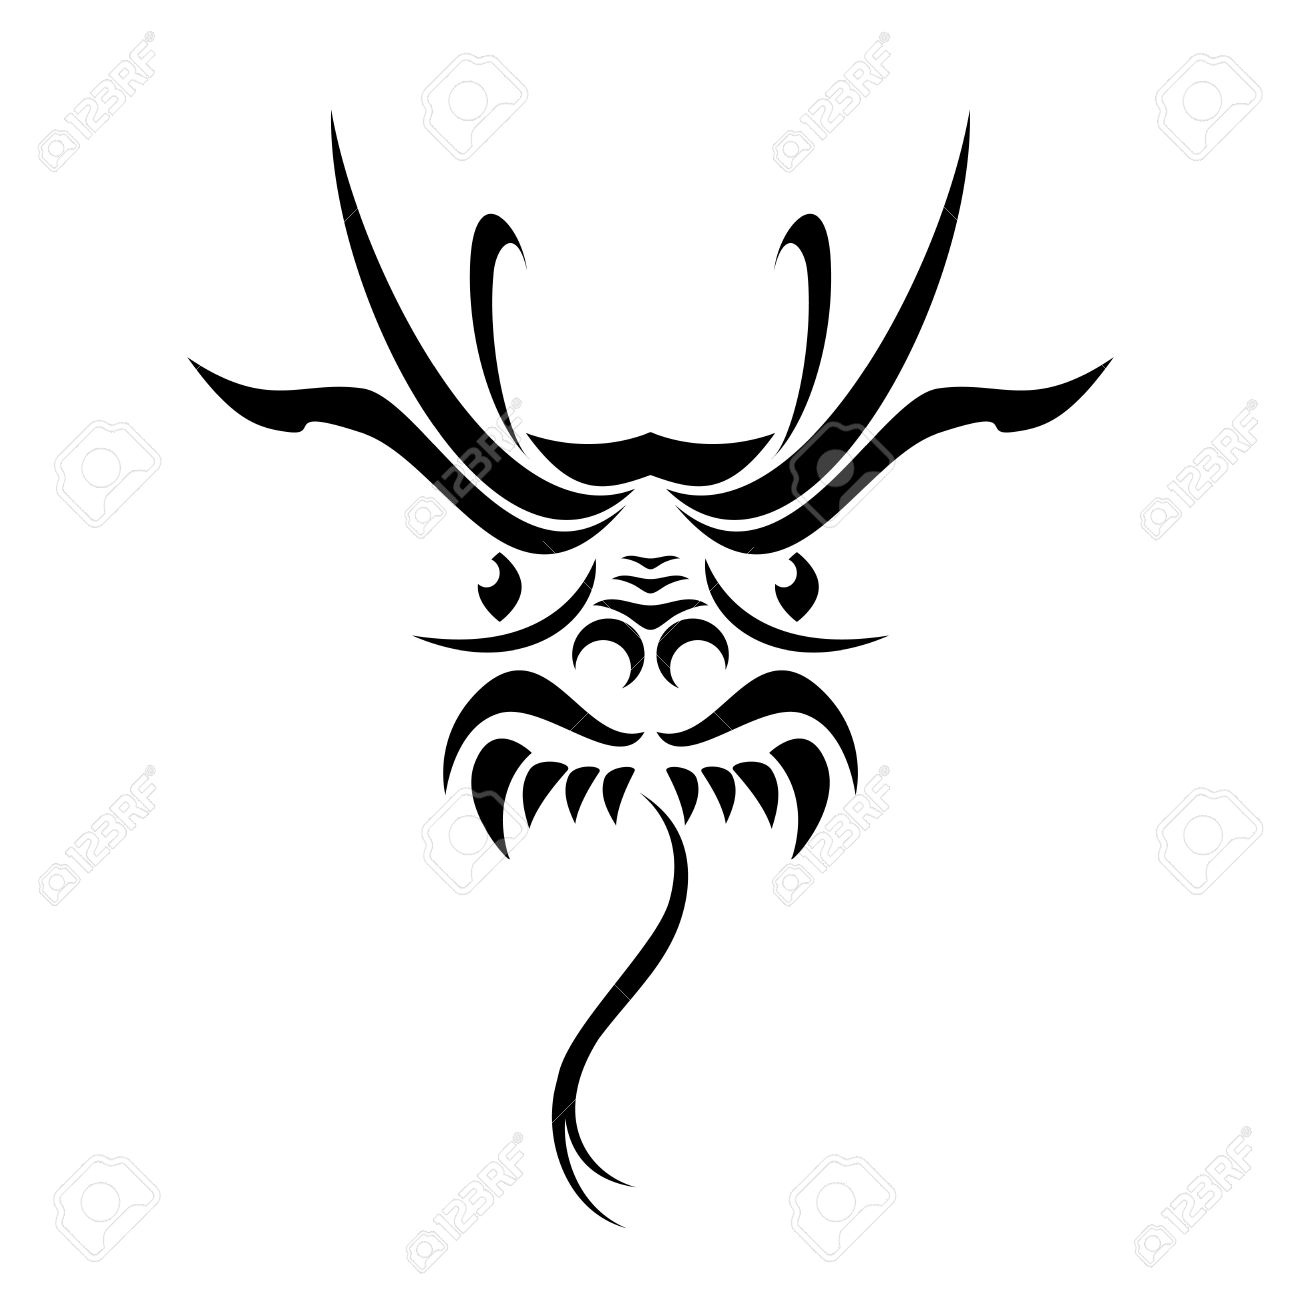 Nice Tribal Dragon Face Tattoo Design